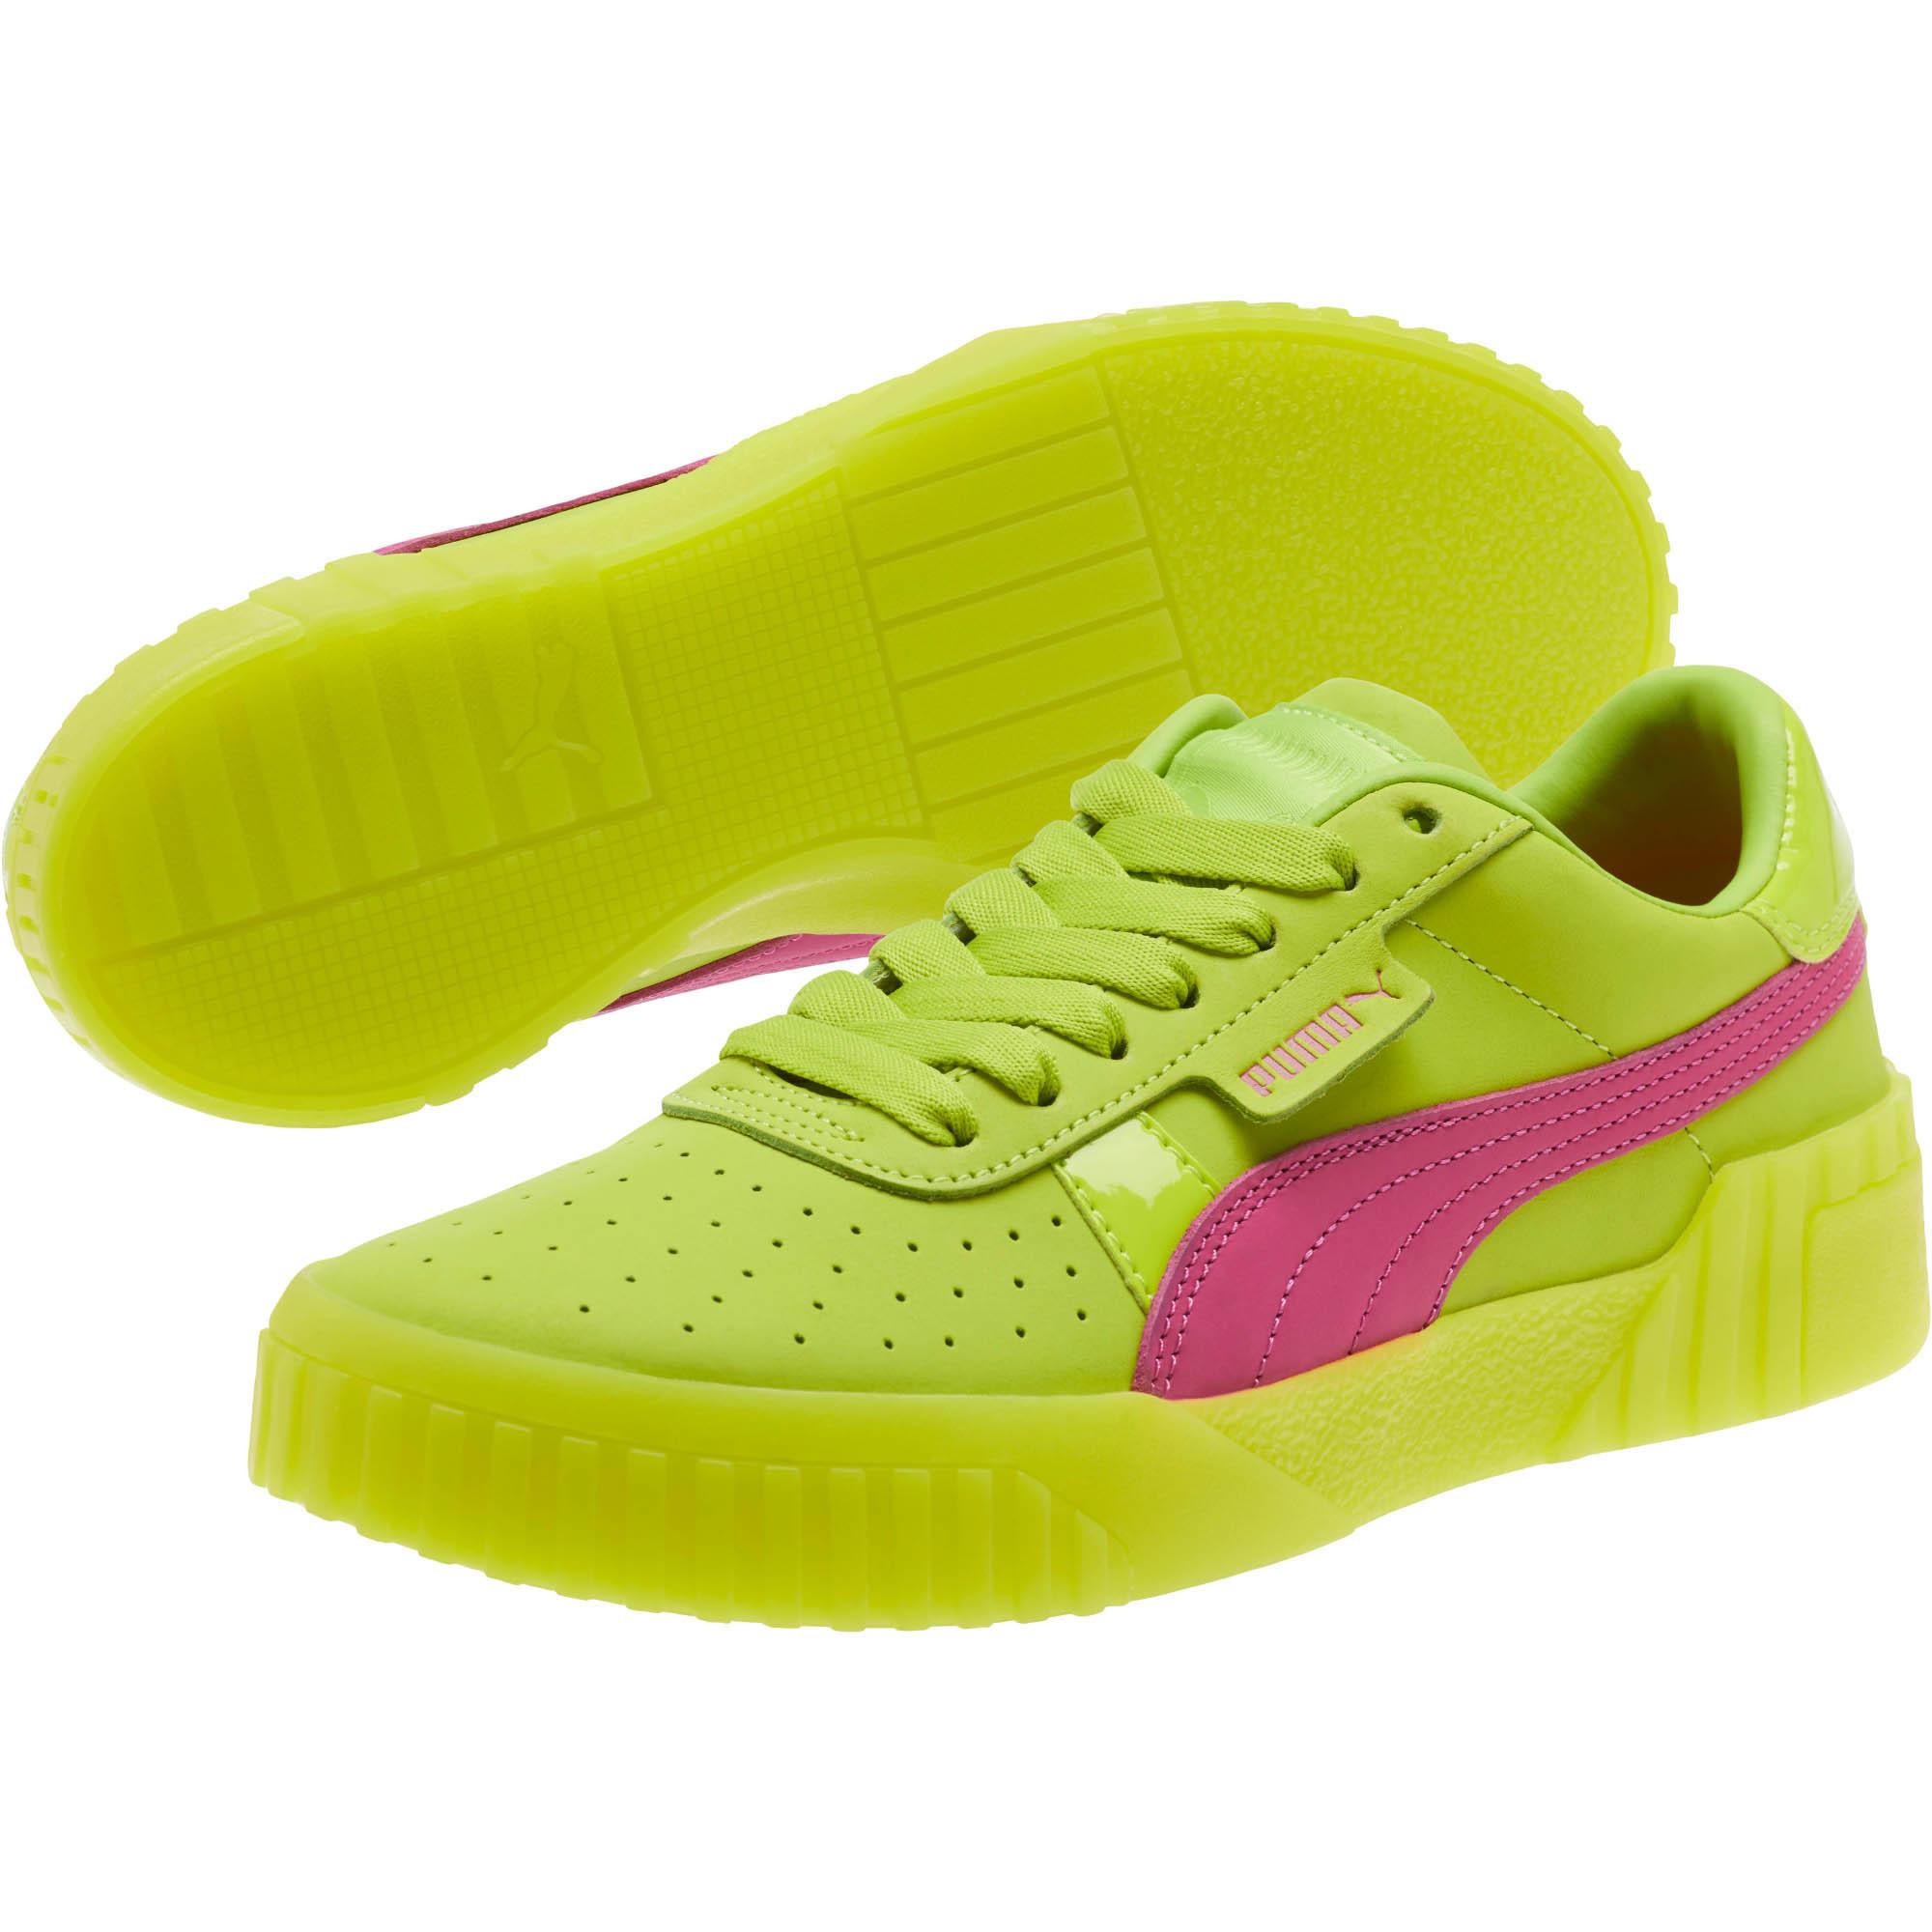 puma lime green shoes